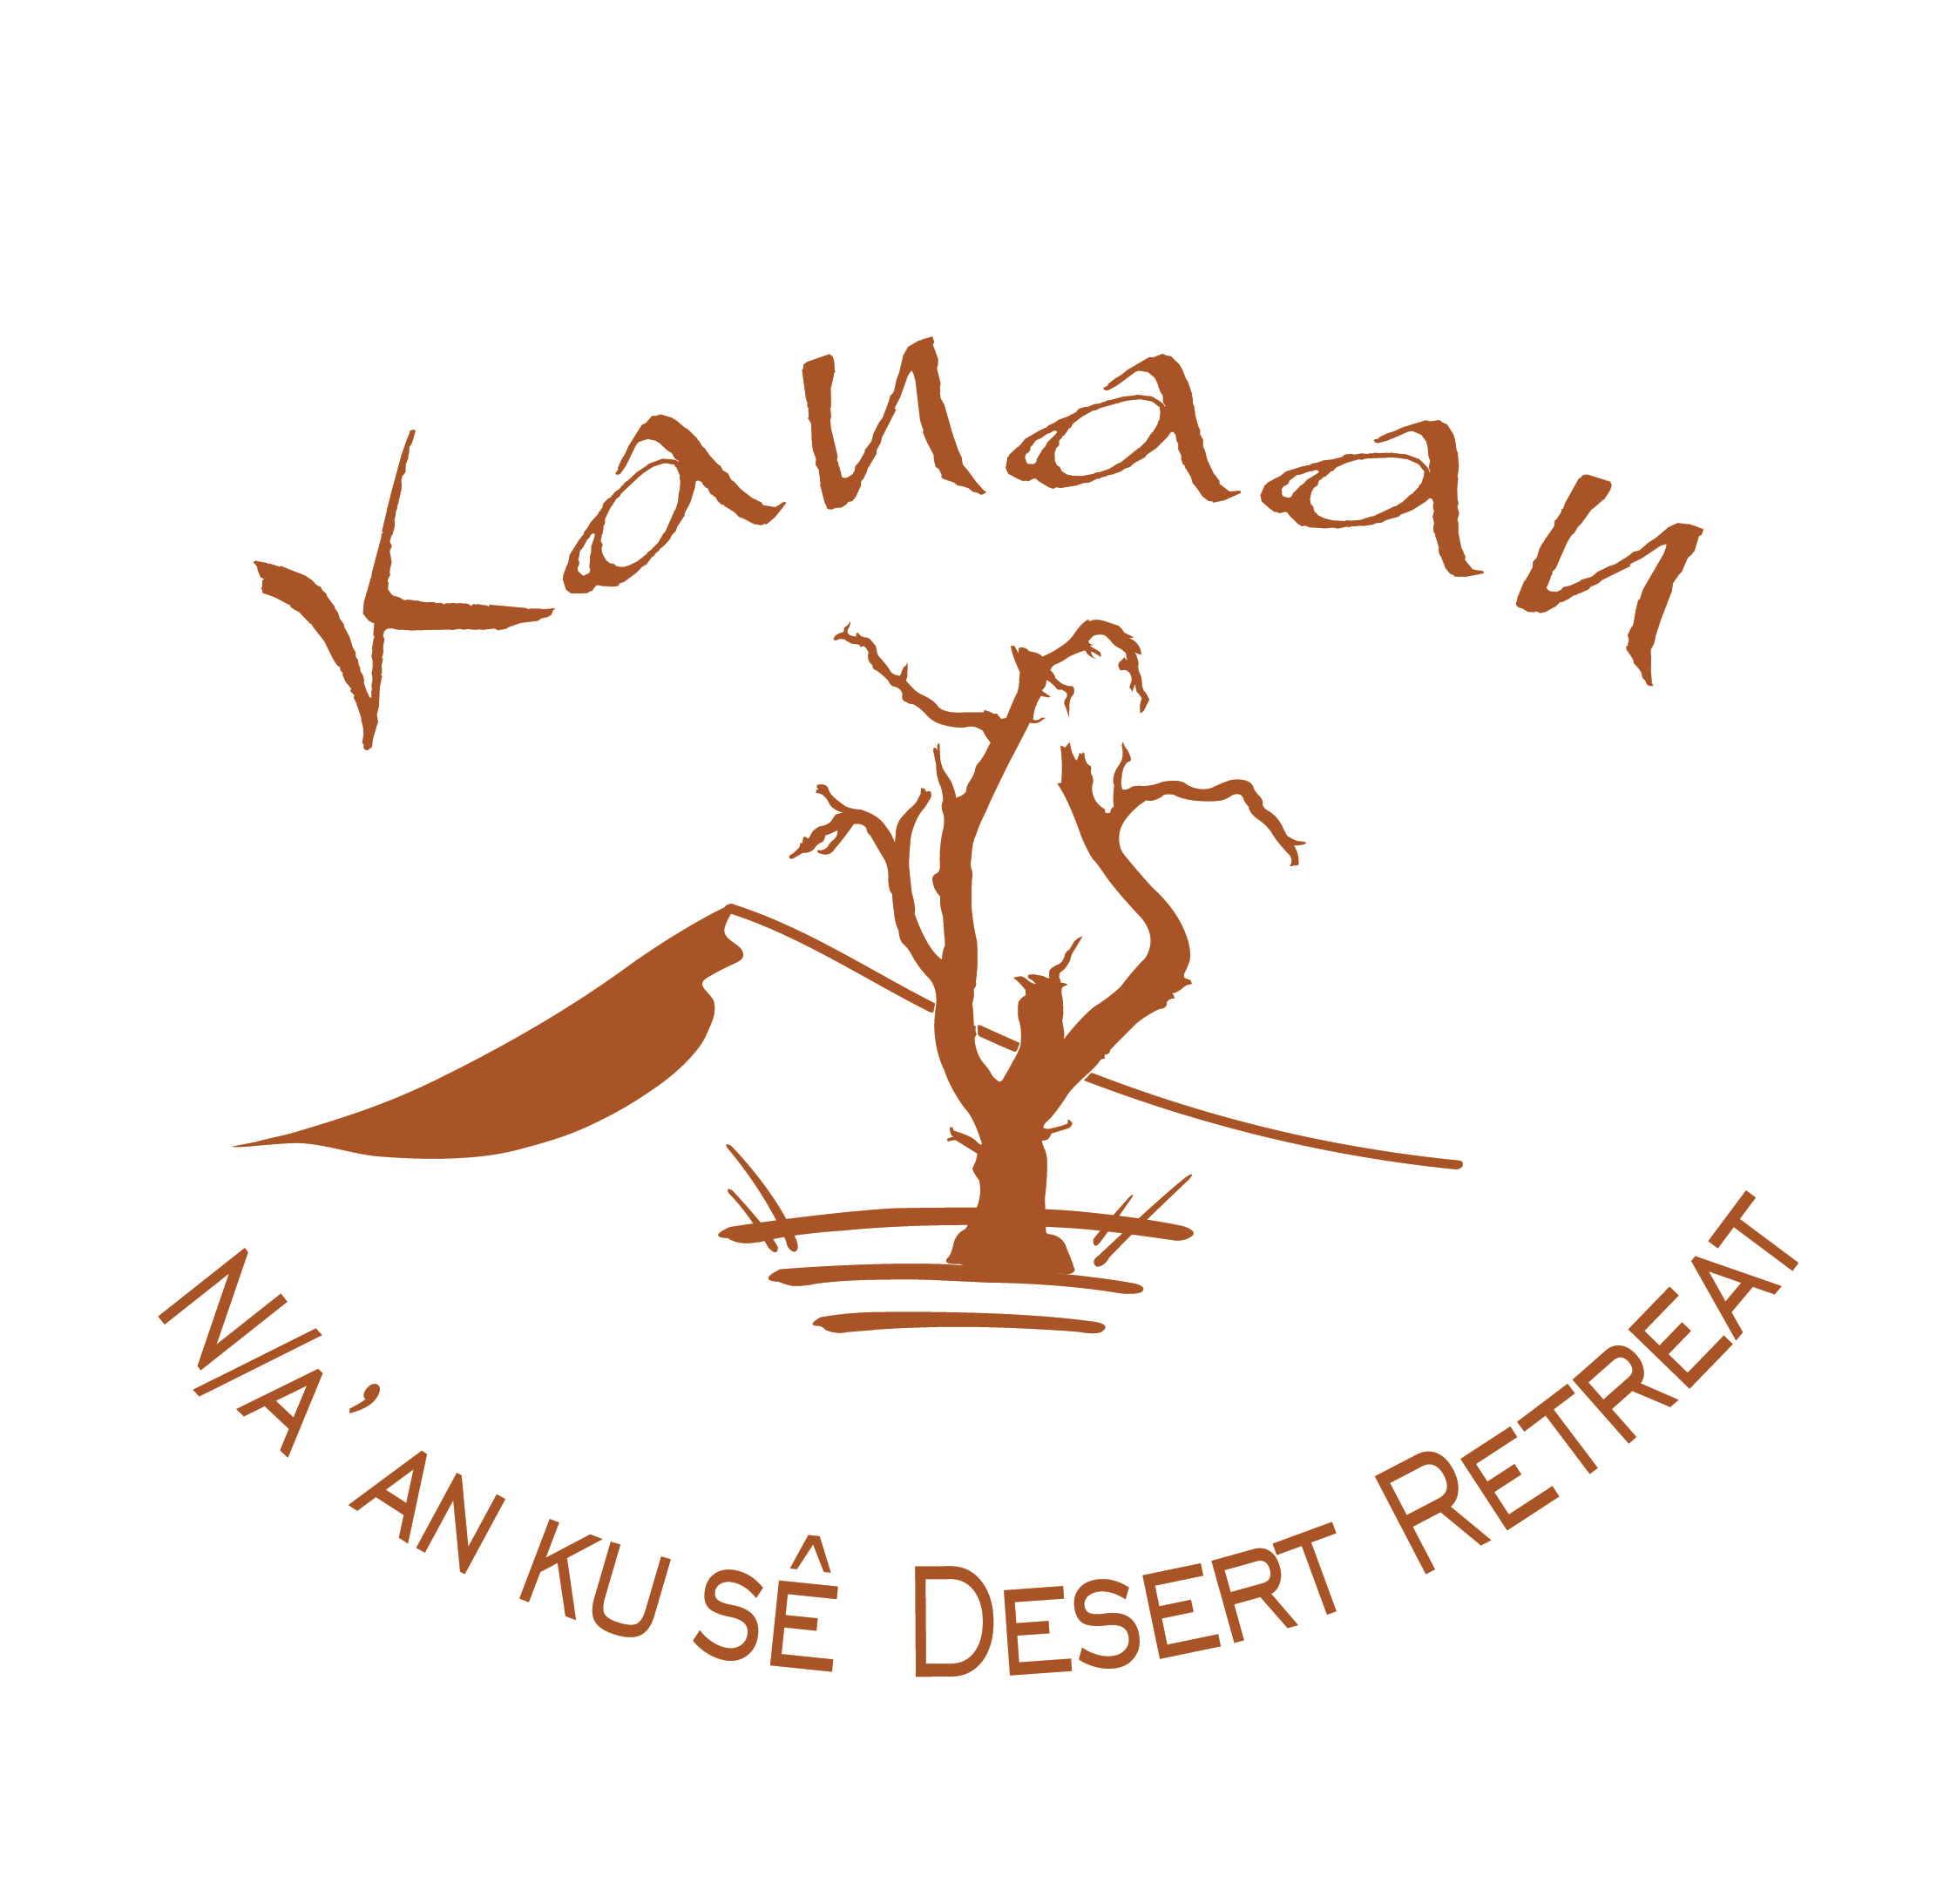 Kanaan logo